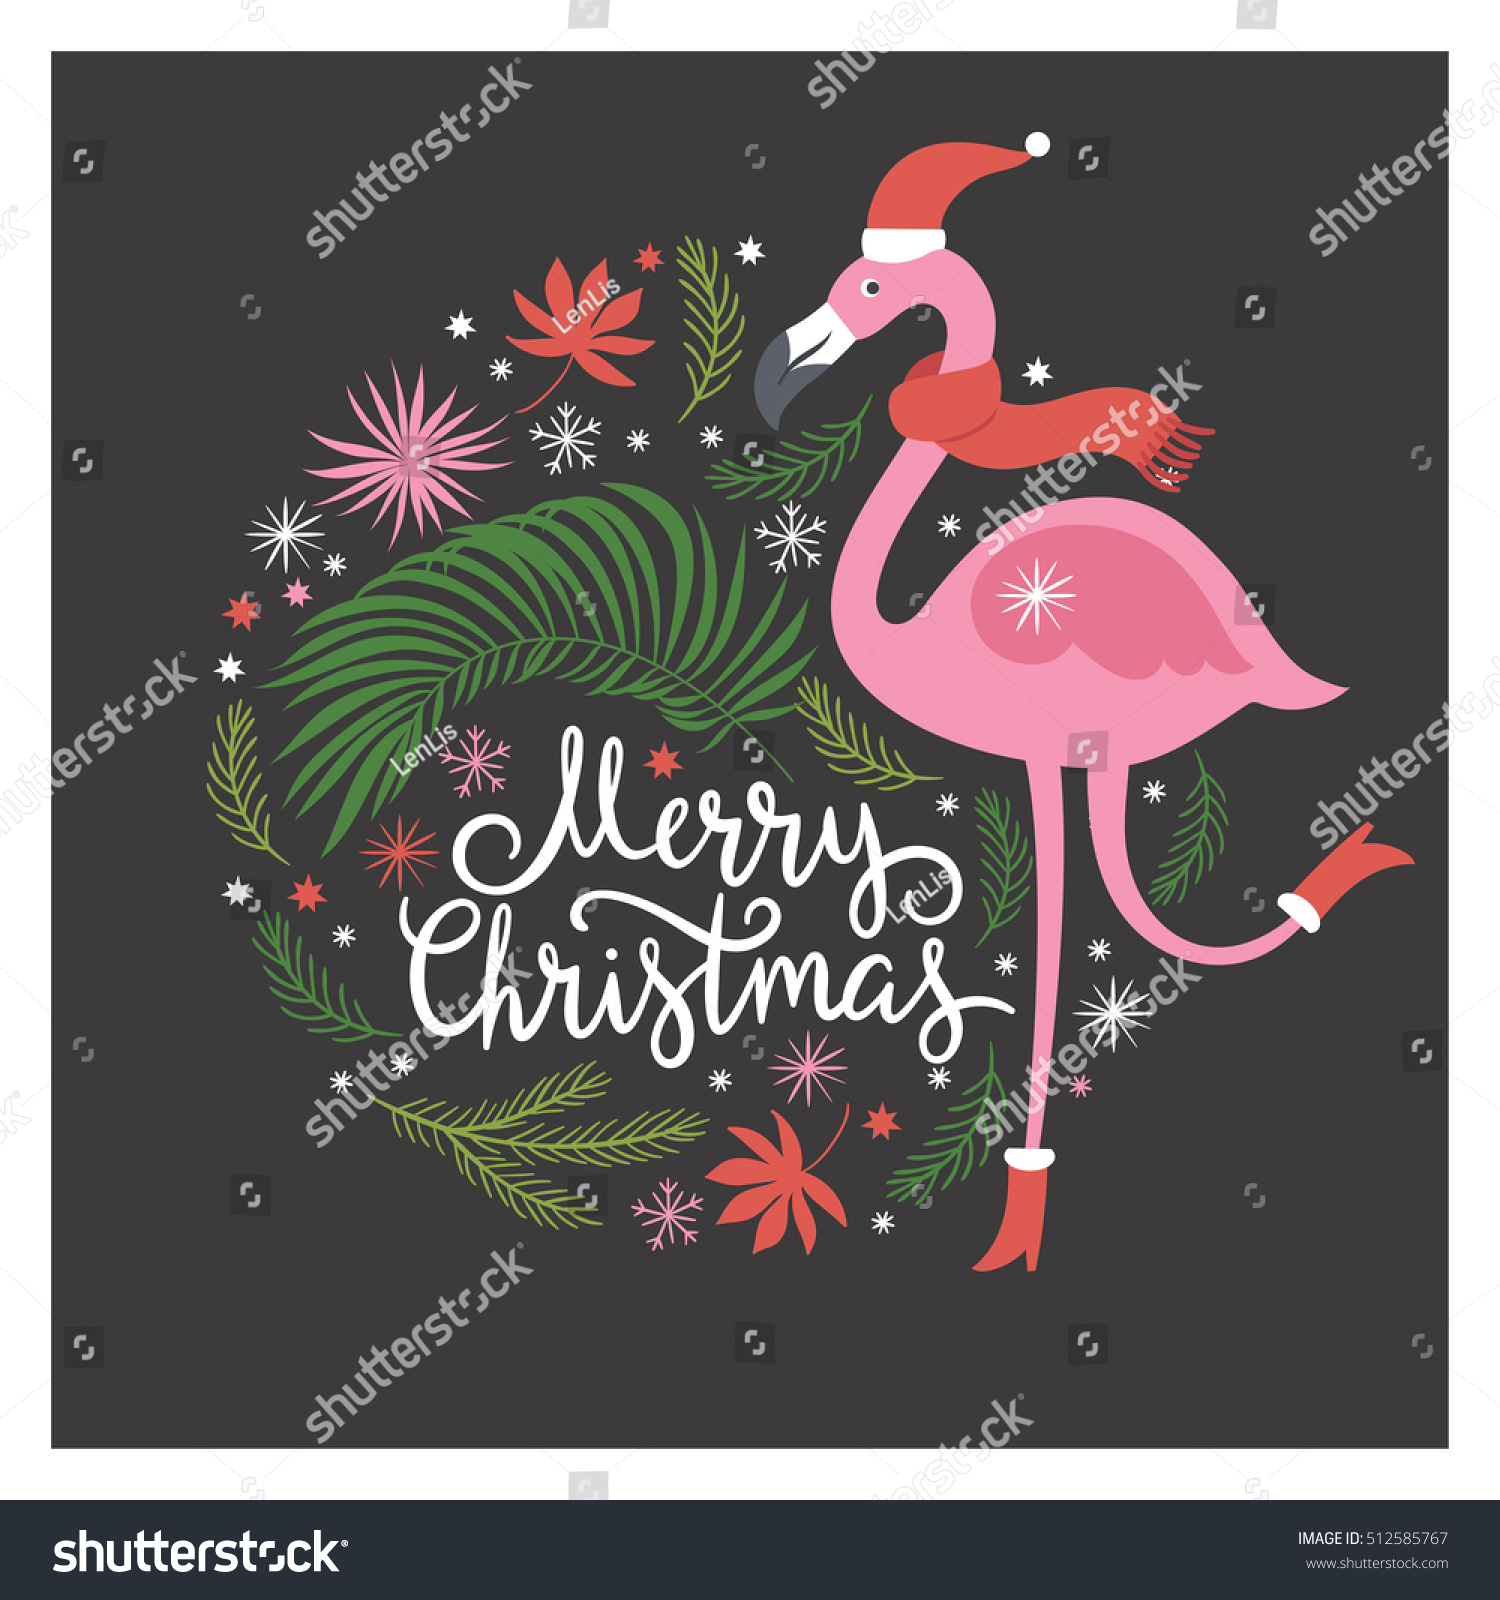 Flamingo christmas Images, Stock Photos & Vectors | Shutterstock